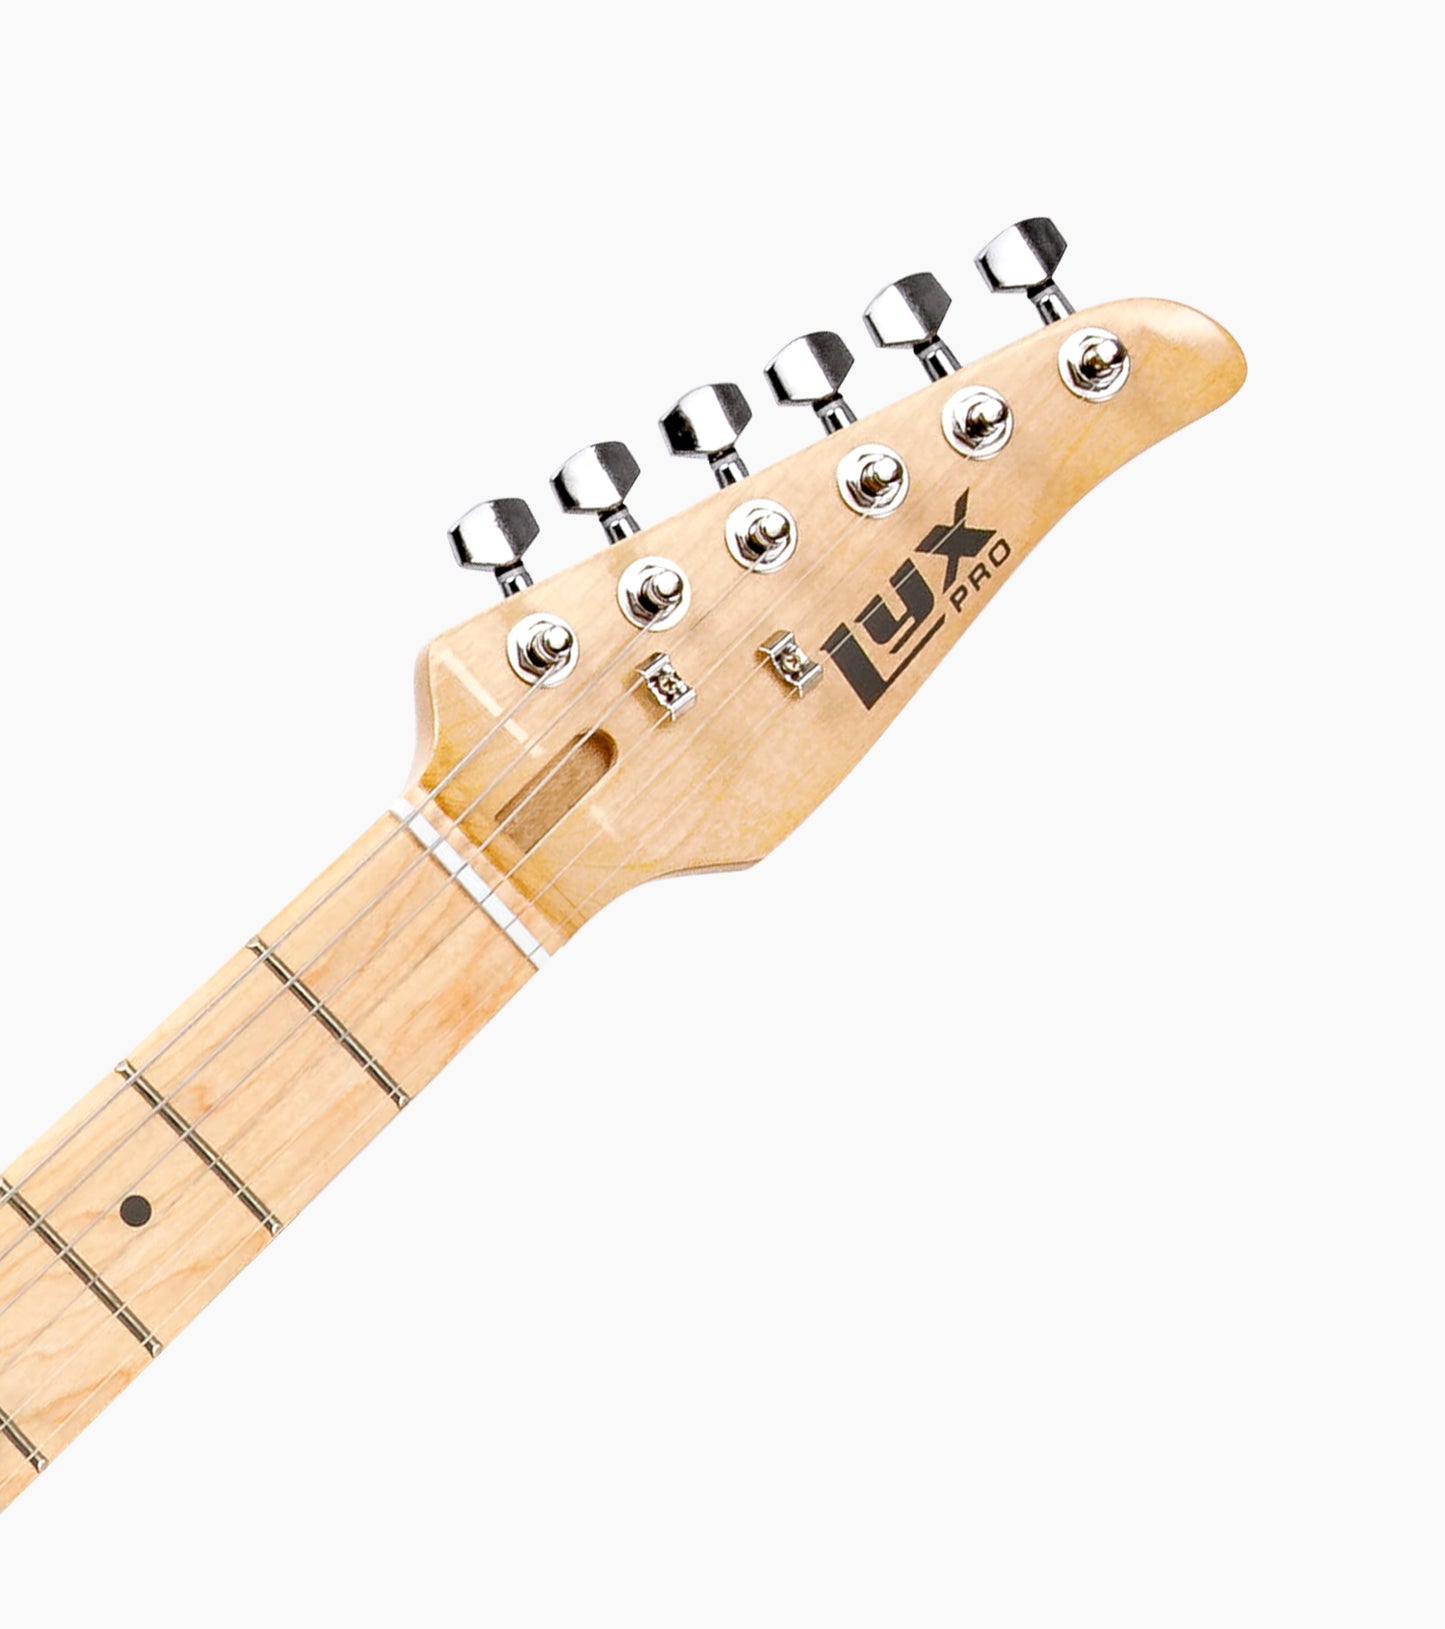 close-up of Natural single-cutaway electric guitar head